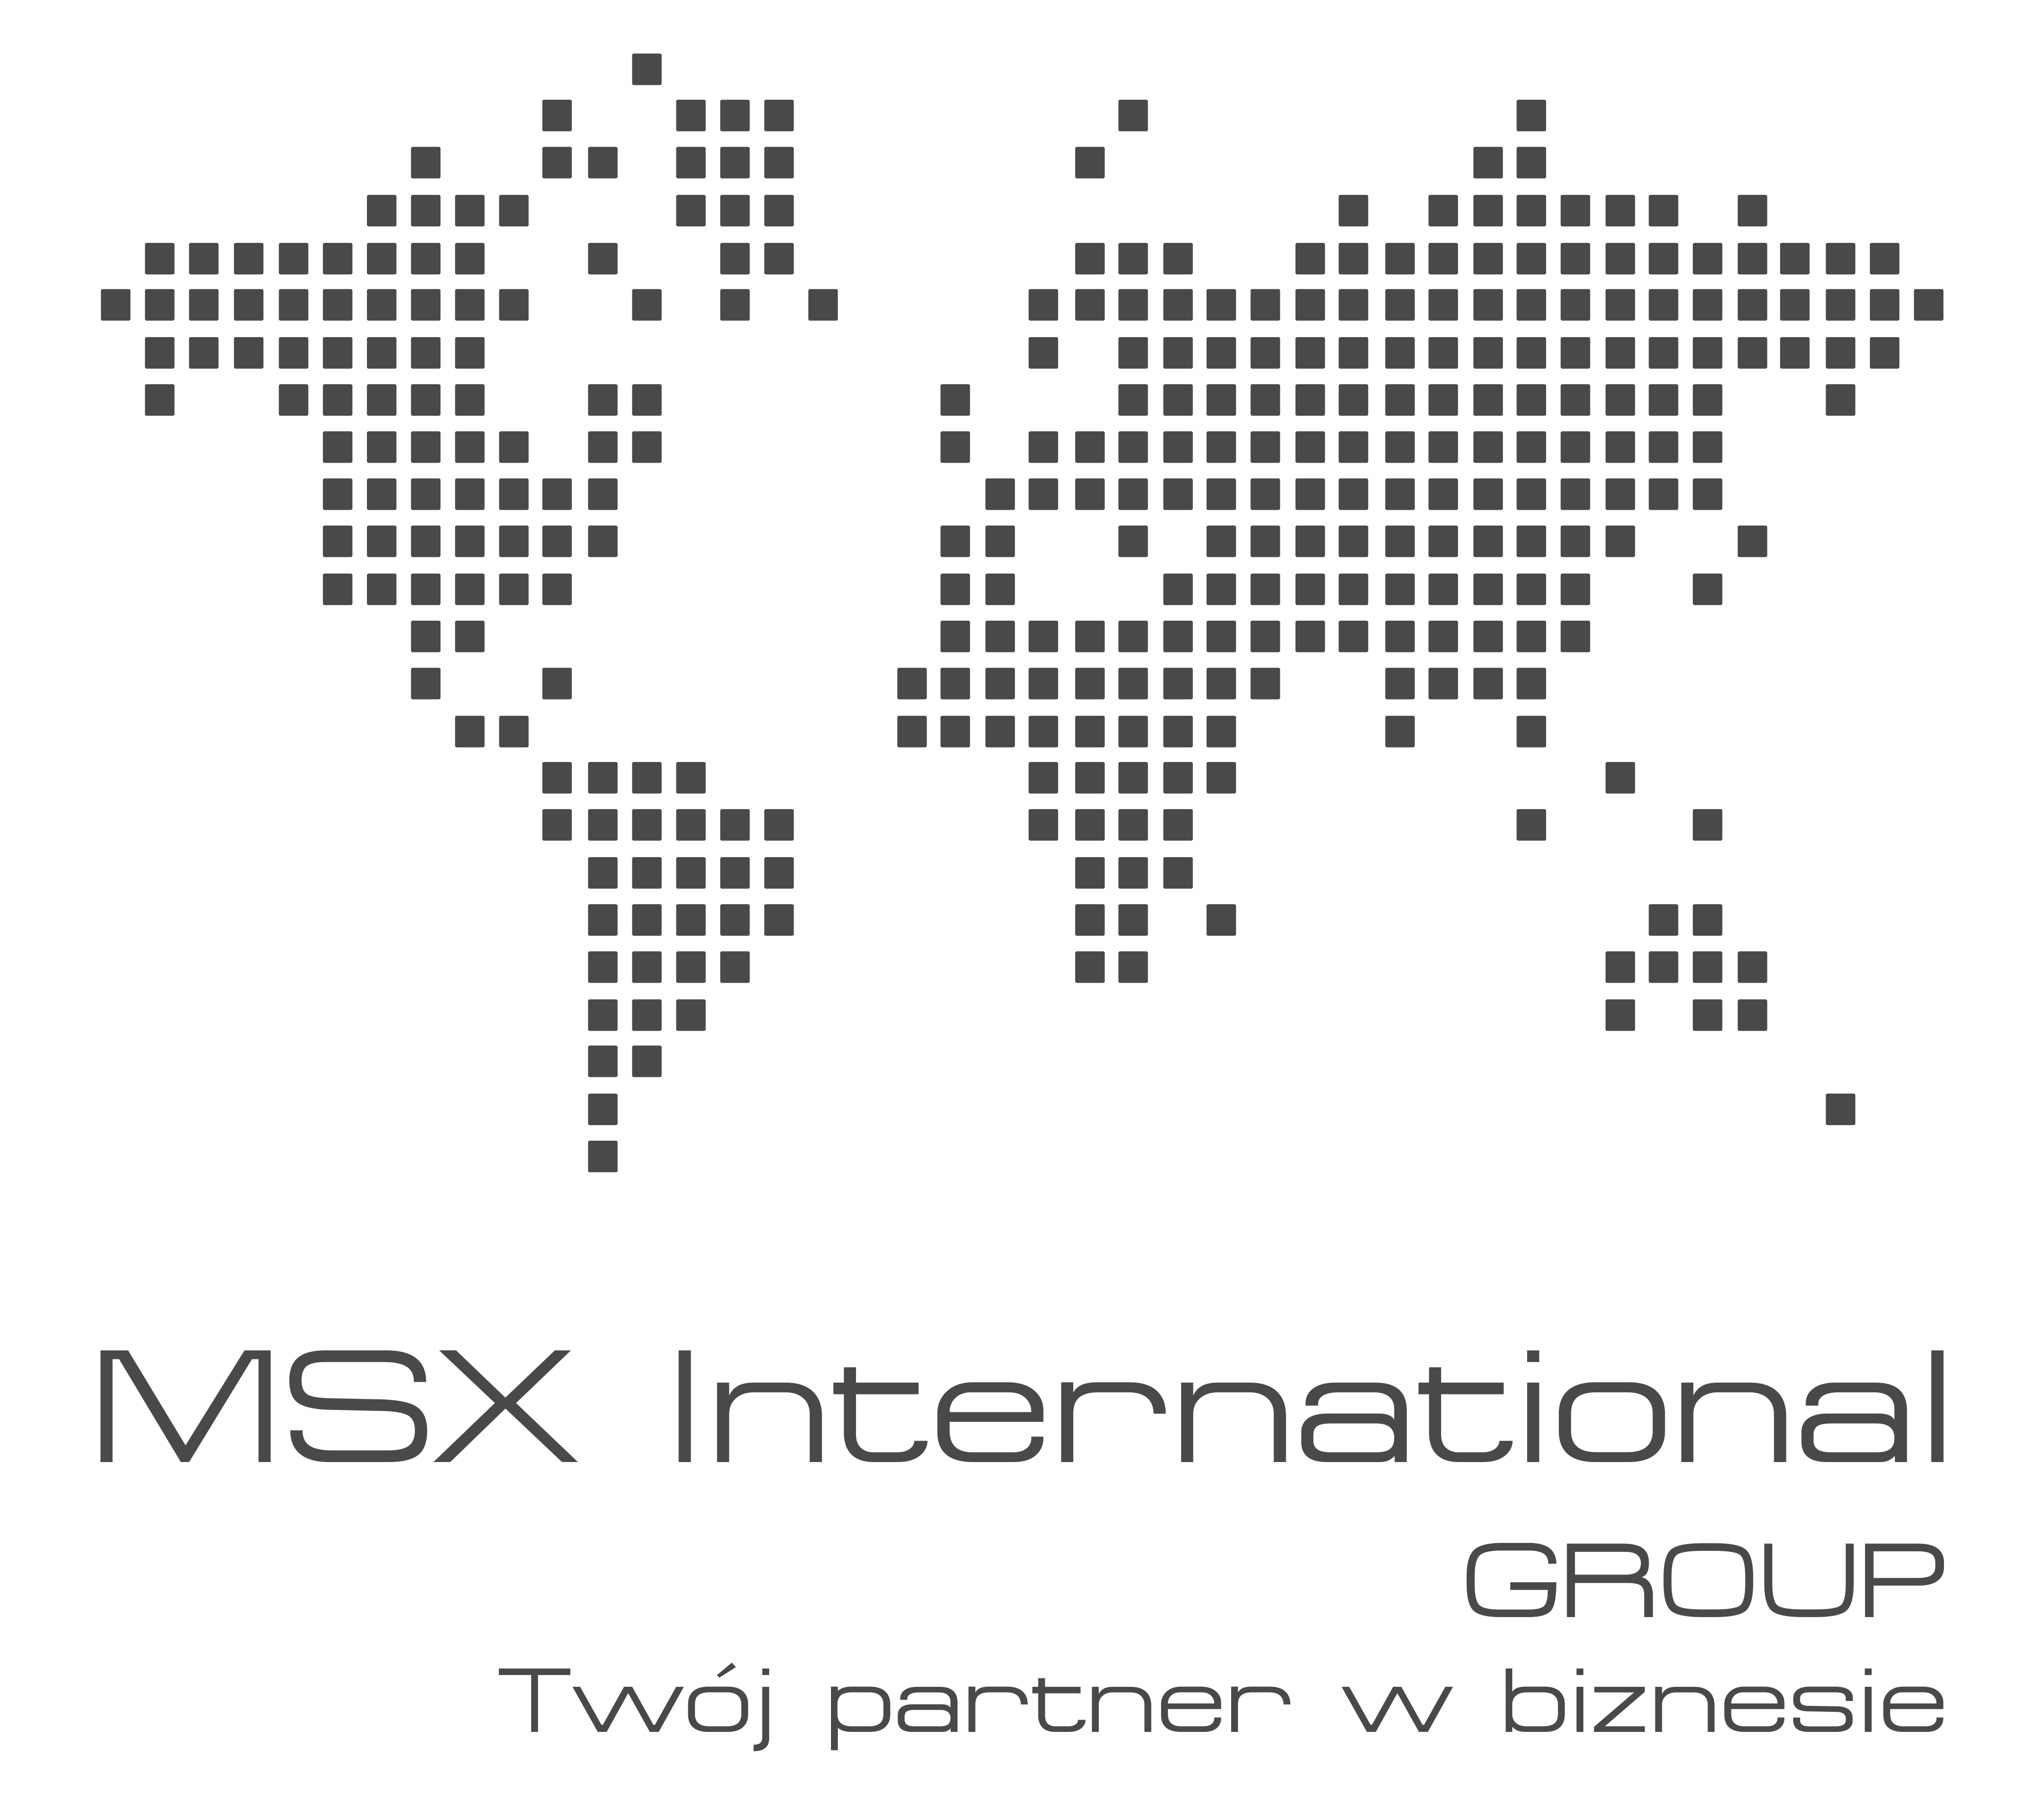 //www.msxinternational.pl/wp-content/uploads/2015/12/logo-msx-partner.png